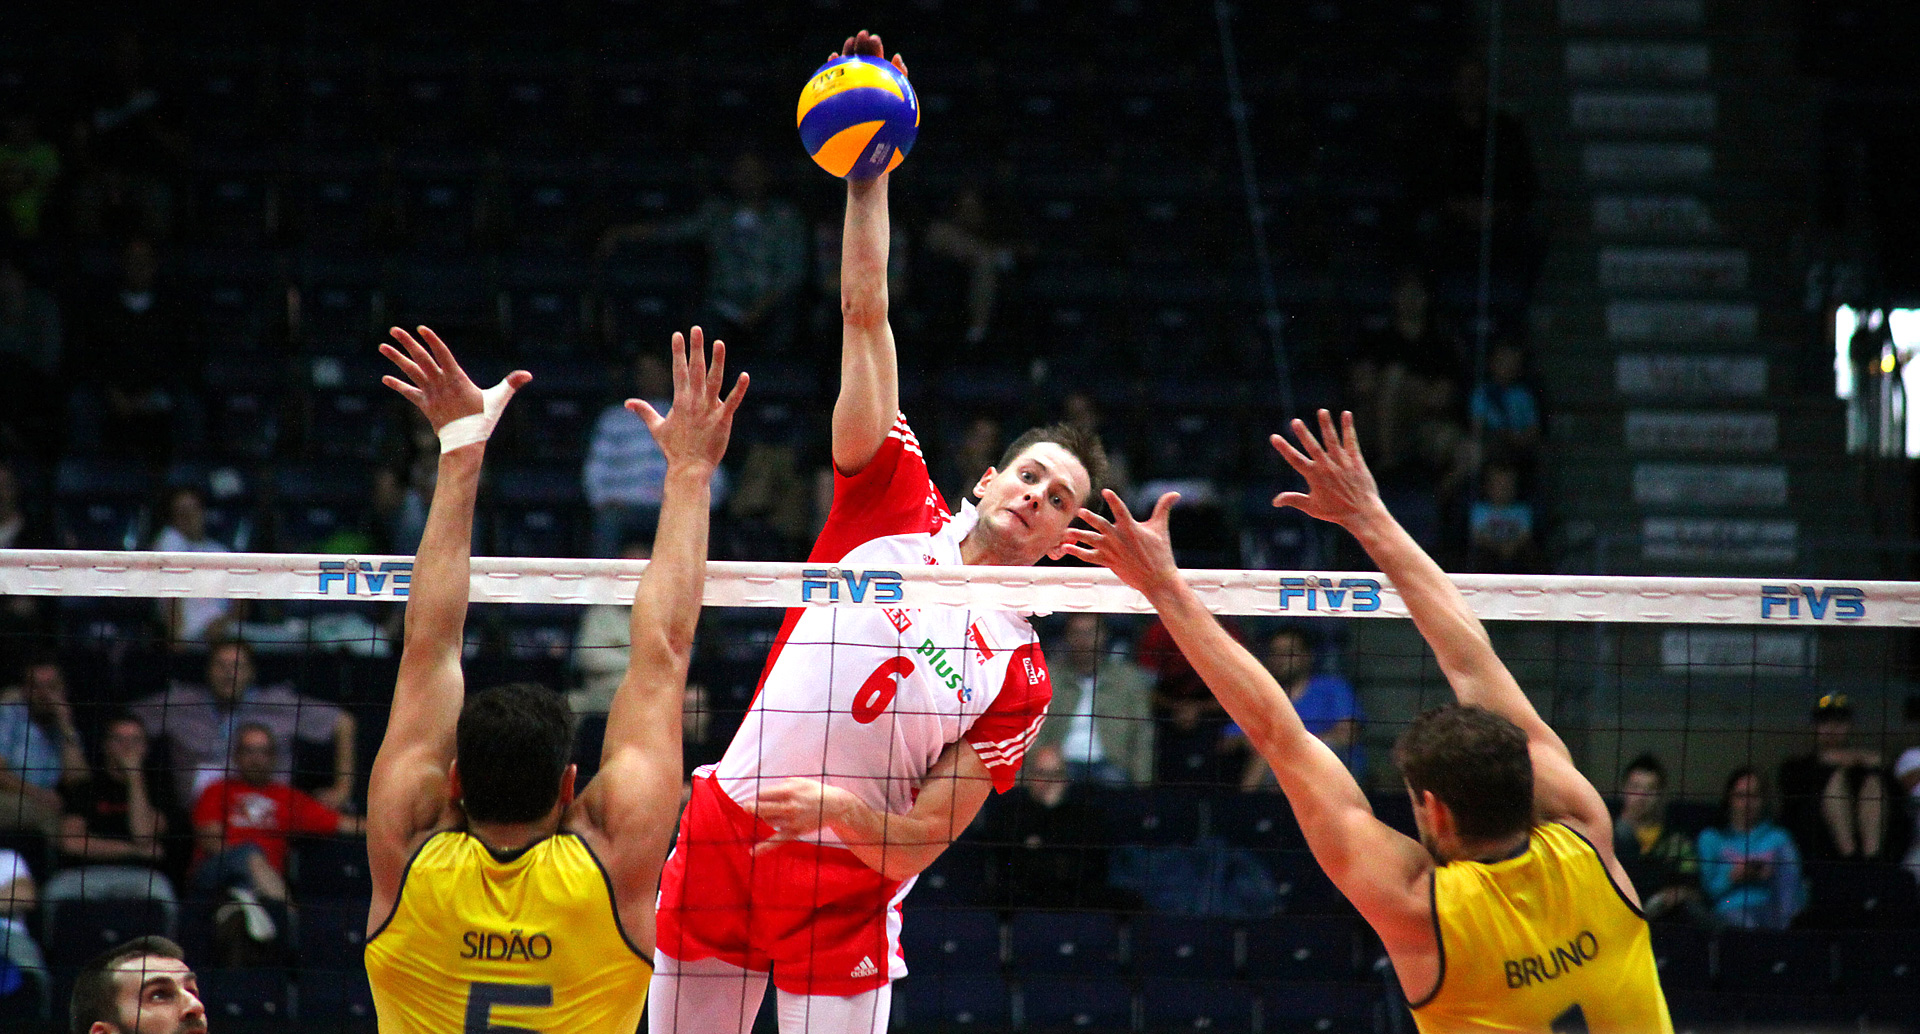 Player Hitting A Volleyball - HD Wallpaper 